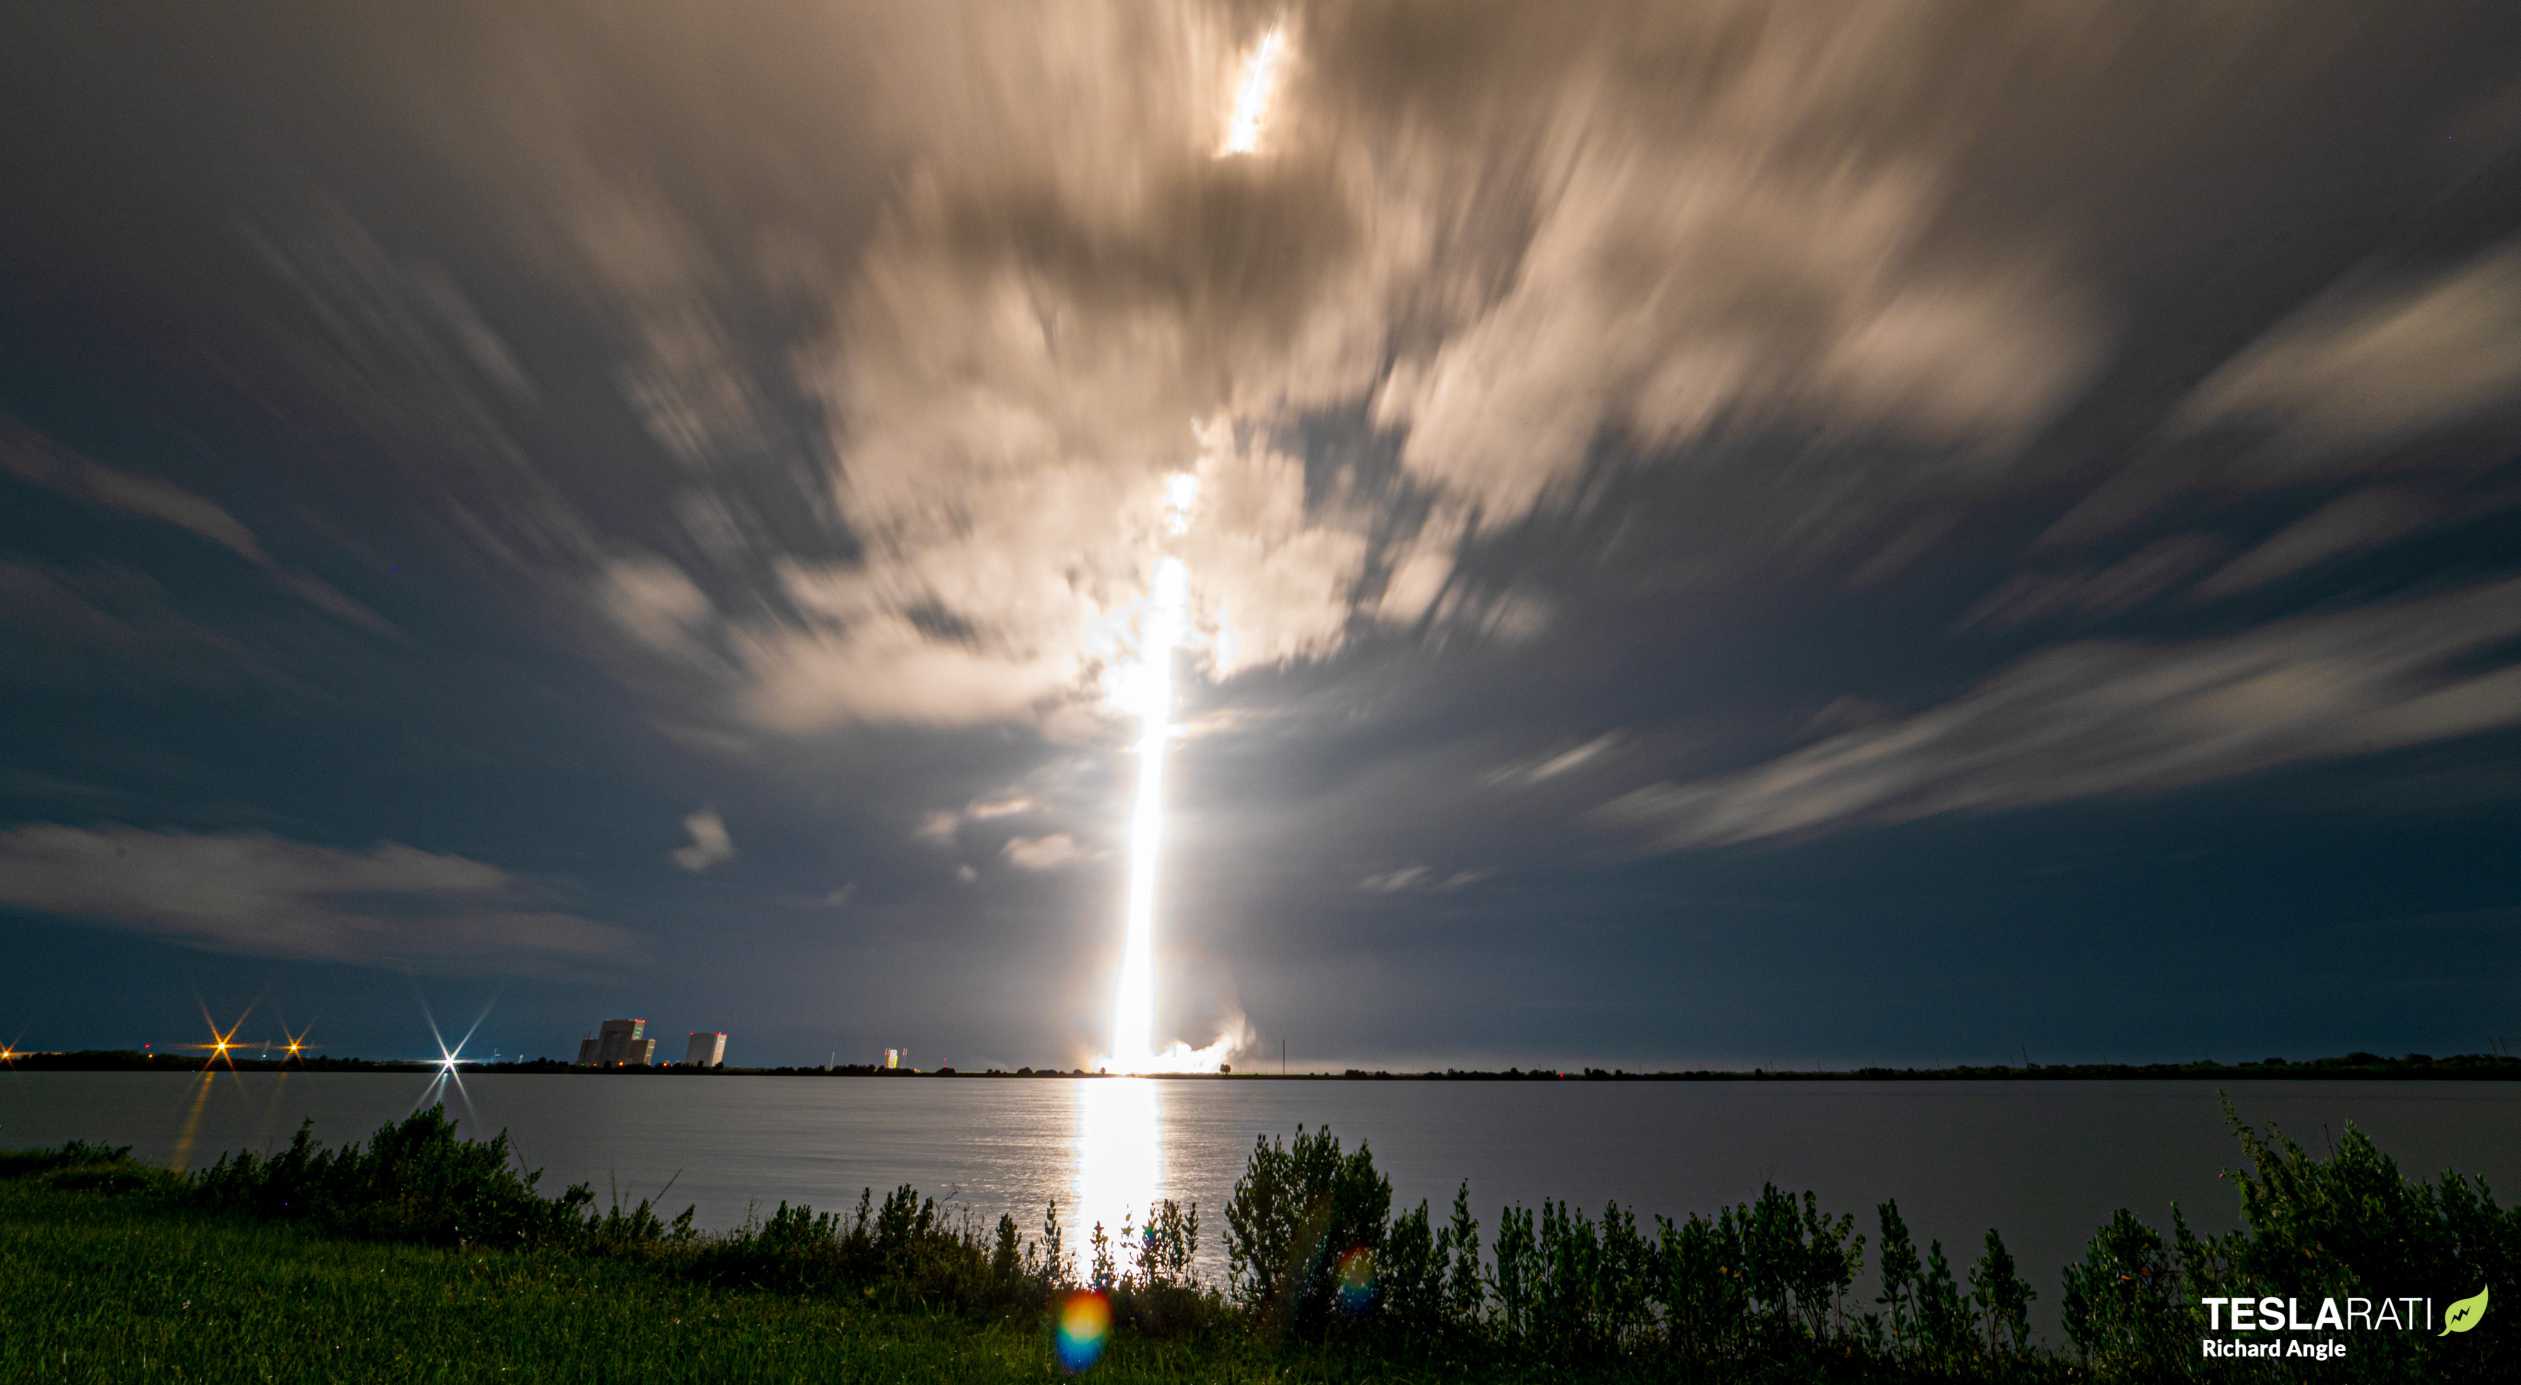 Starlink-8 Falcon 9 B1049 LC-40 060320 (Richard Angle) streak 1 (c)